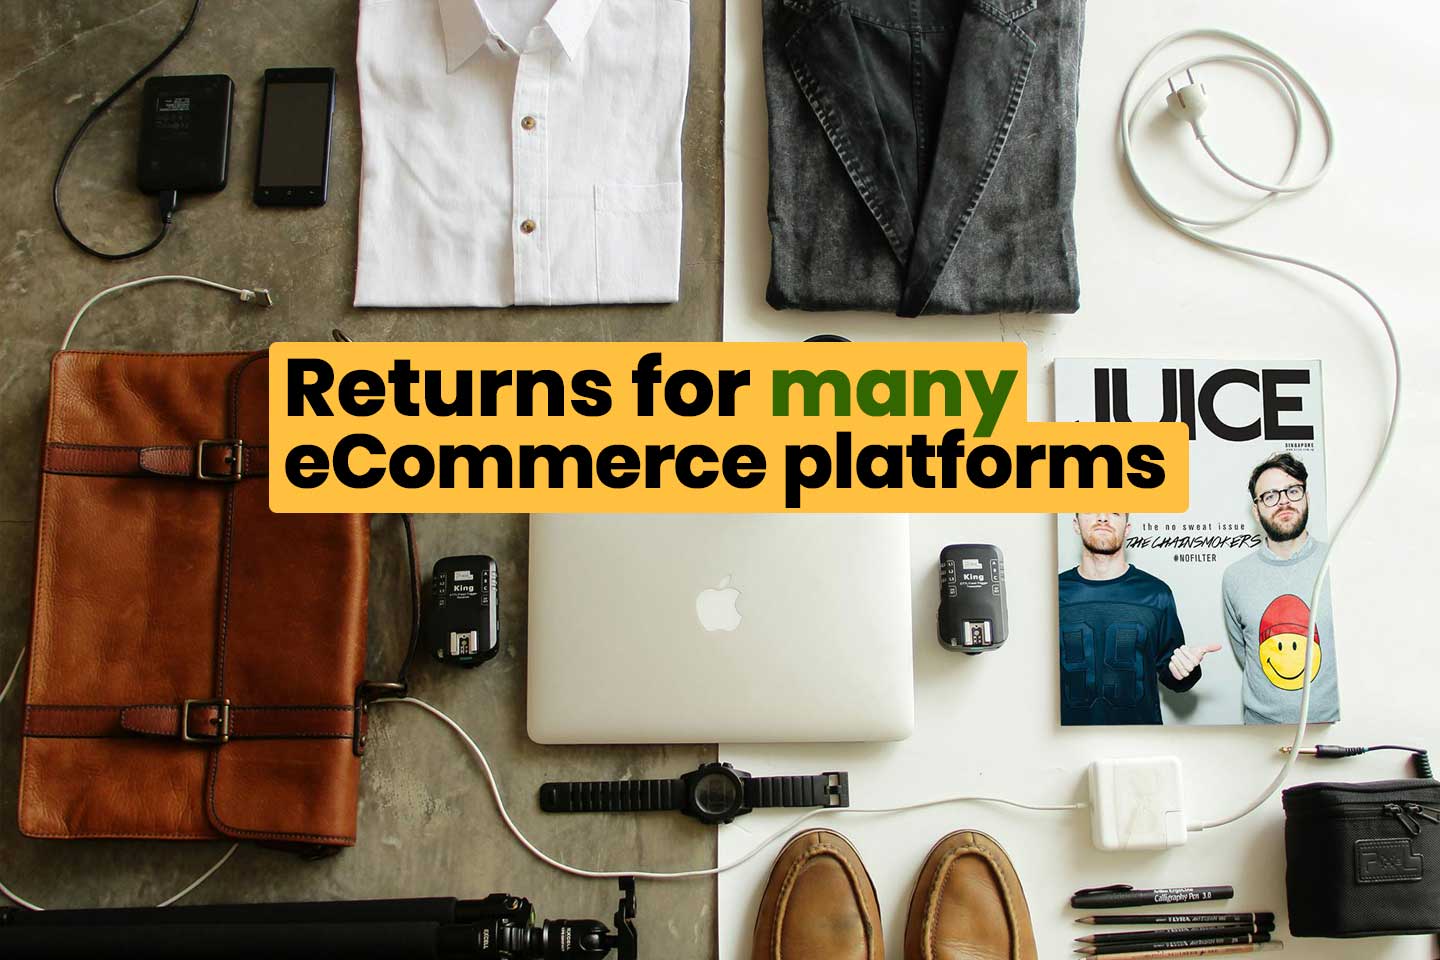 Returns for many ecommerce platforms